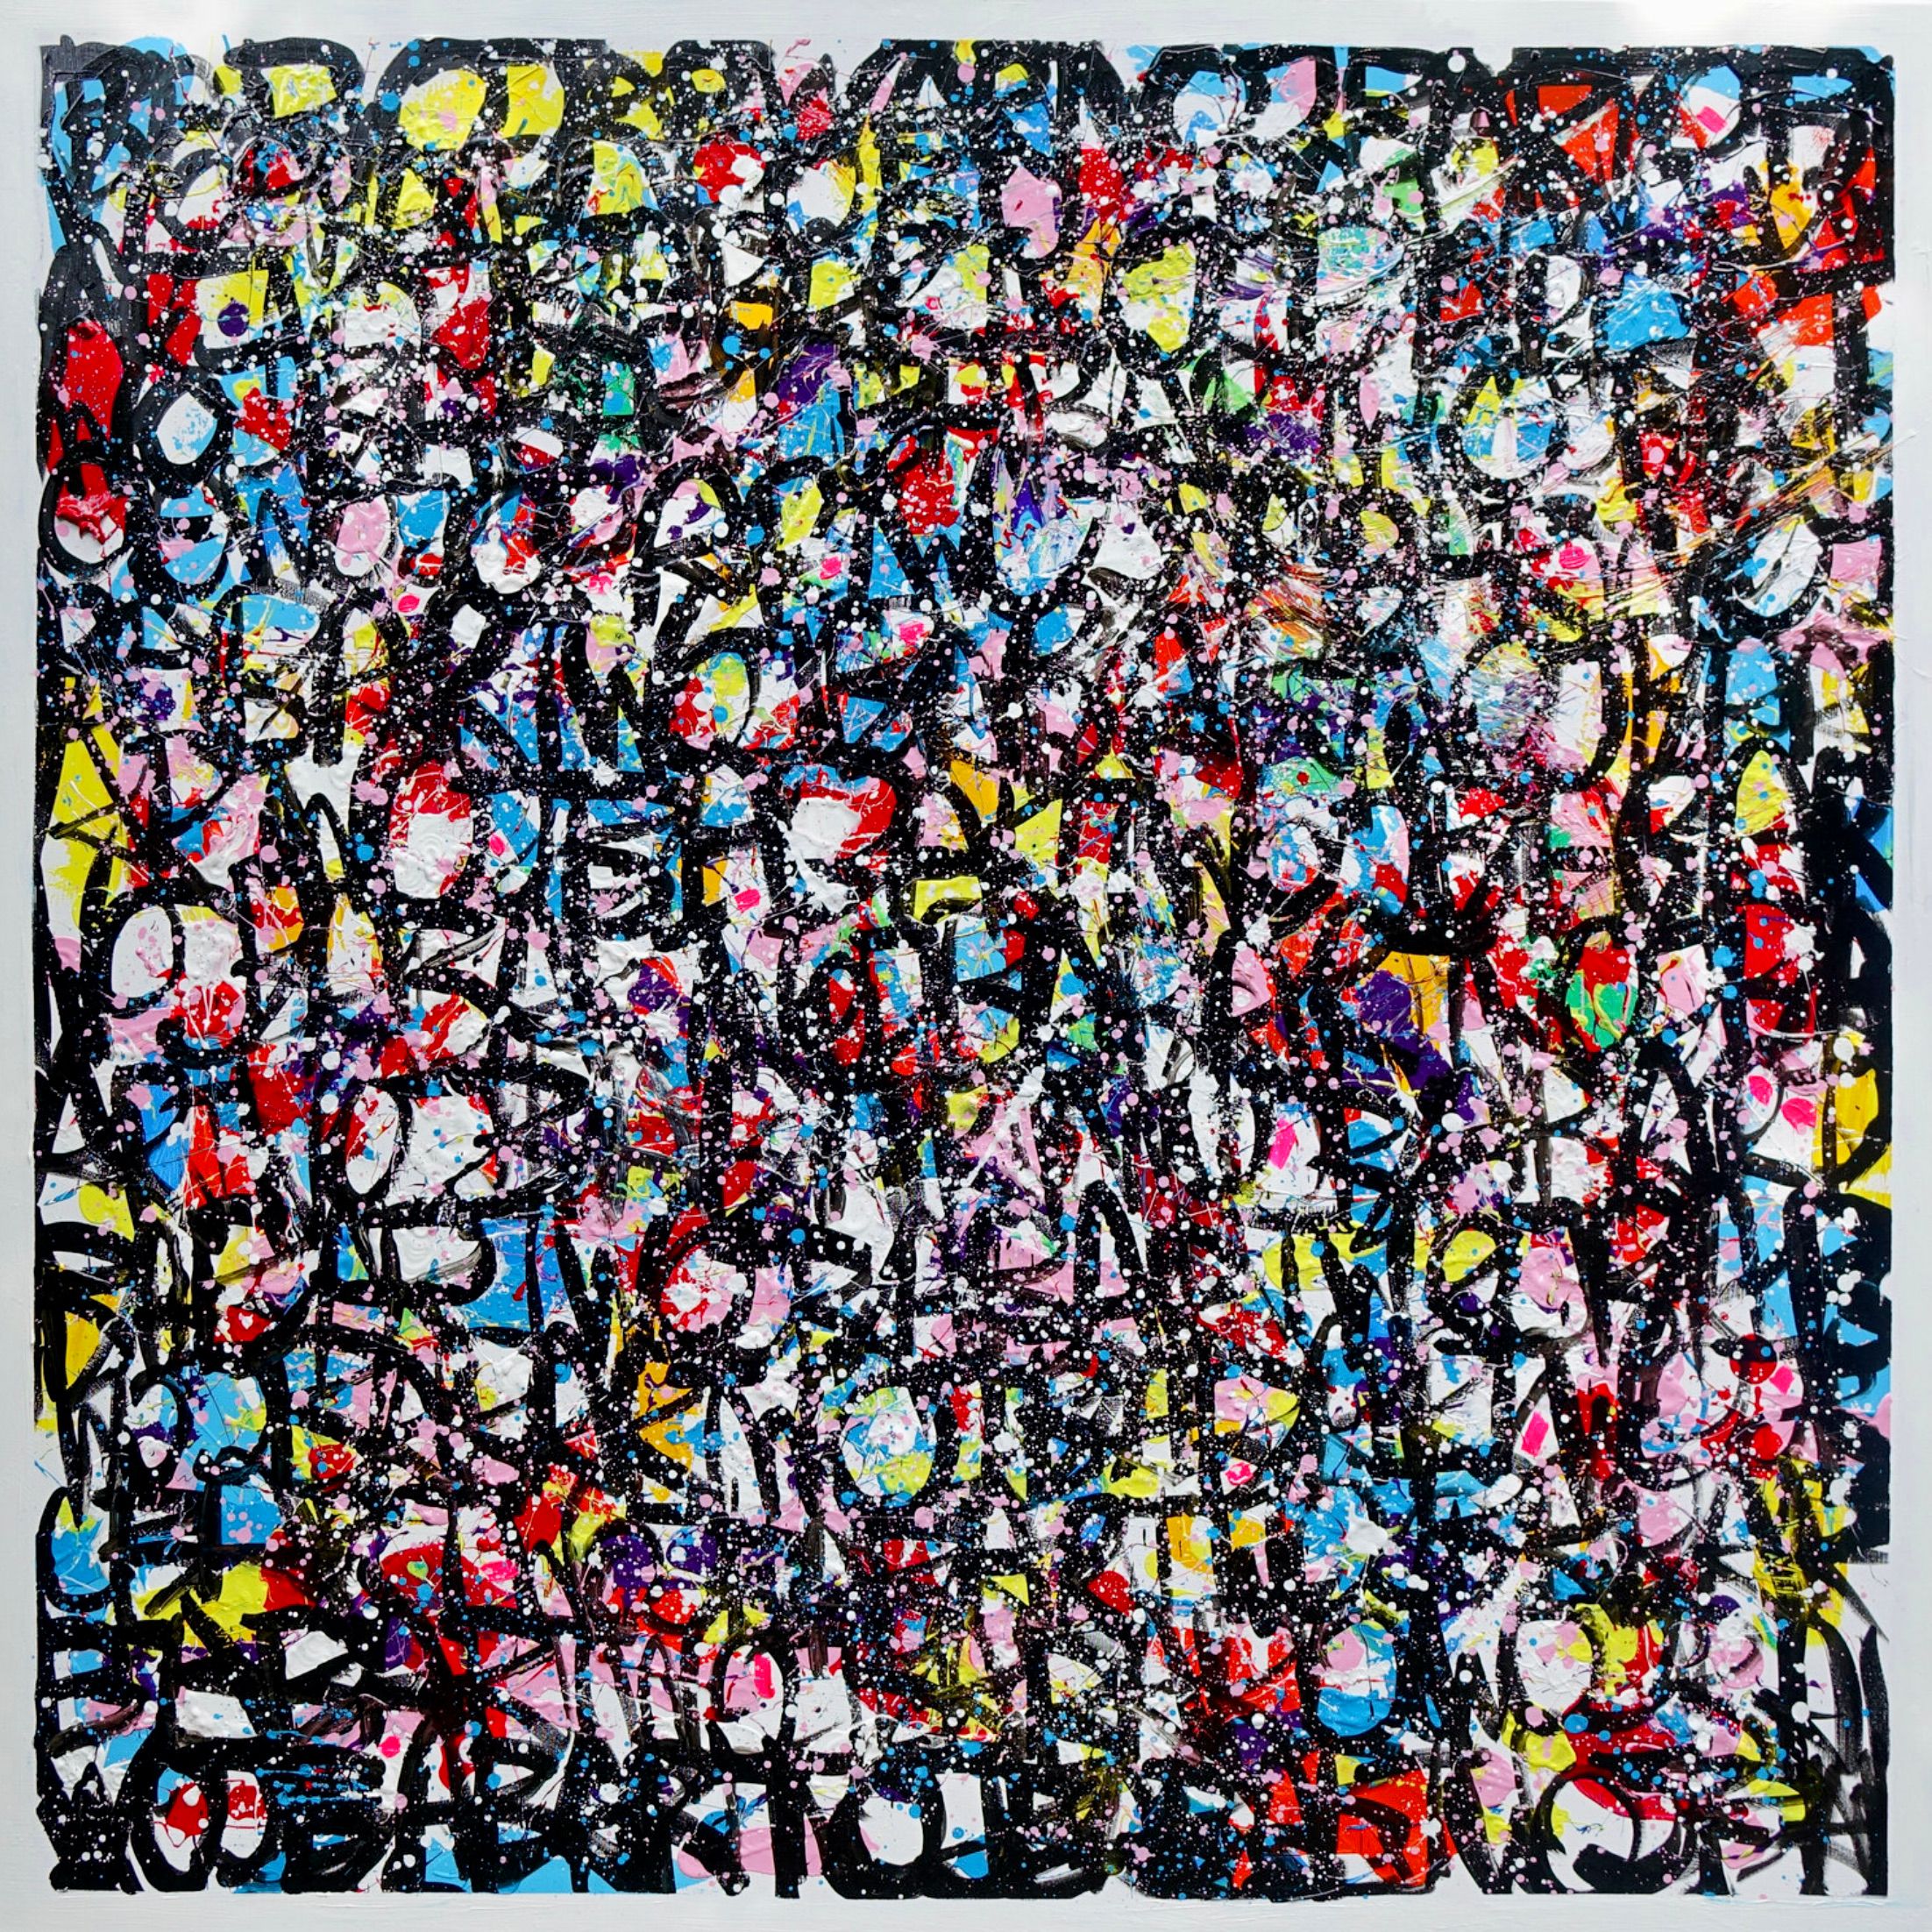 Wojtek Babski, "Abstract Graffiti 3", Peinture abstraite pop-art grand format sur toile